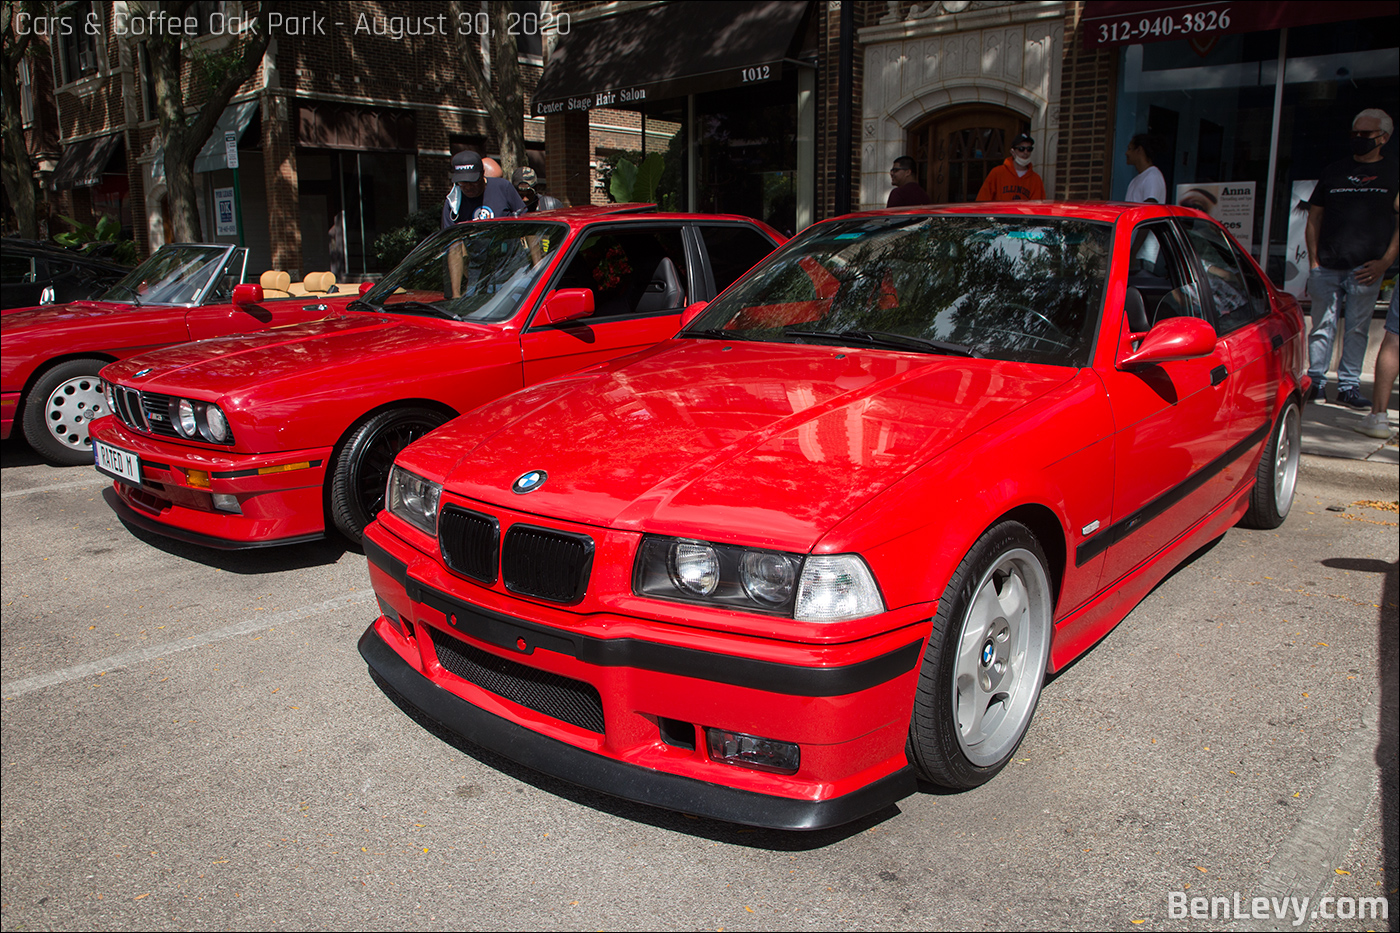 Red E30 and E36 BMW M3